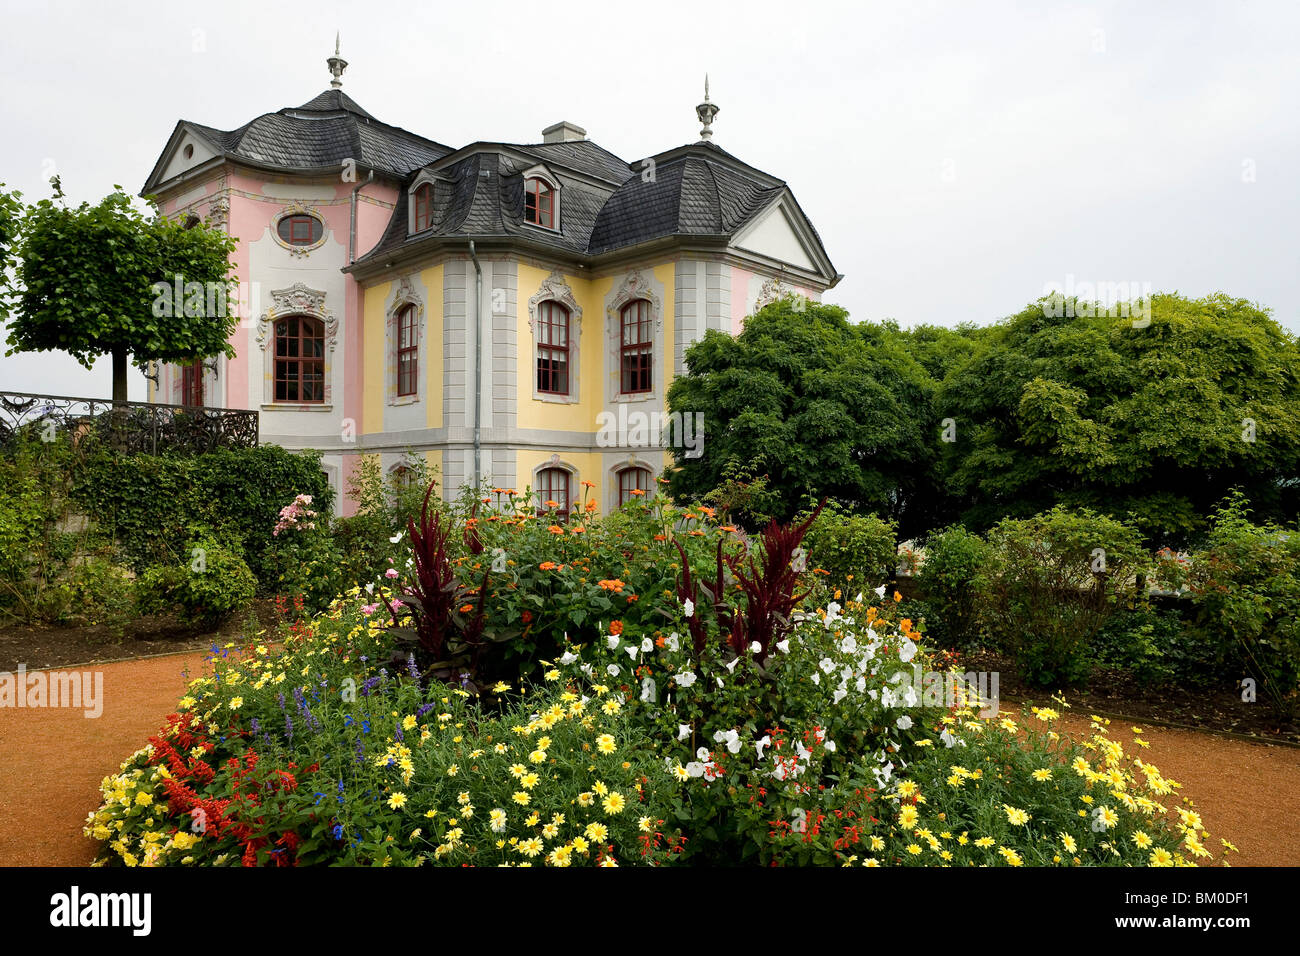 Dornburger castles, Rokoko castle, Dornburg, near Jena, Thuringia, Germany, Europe Stock Photo